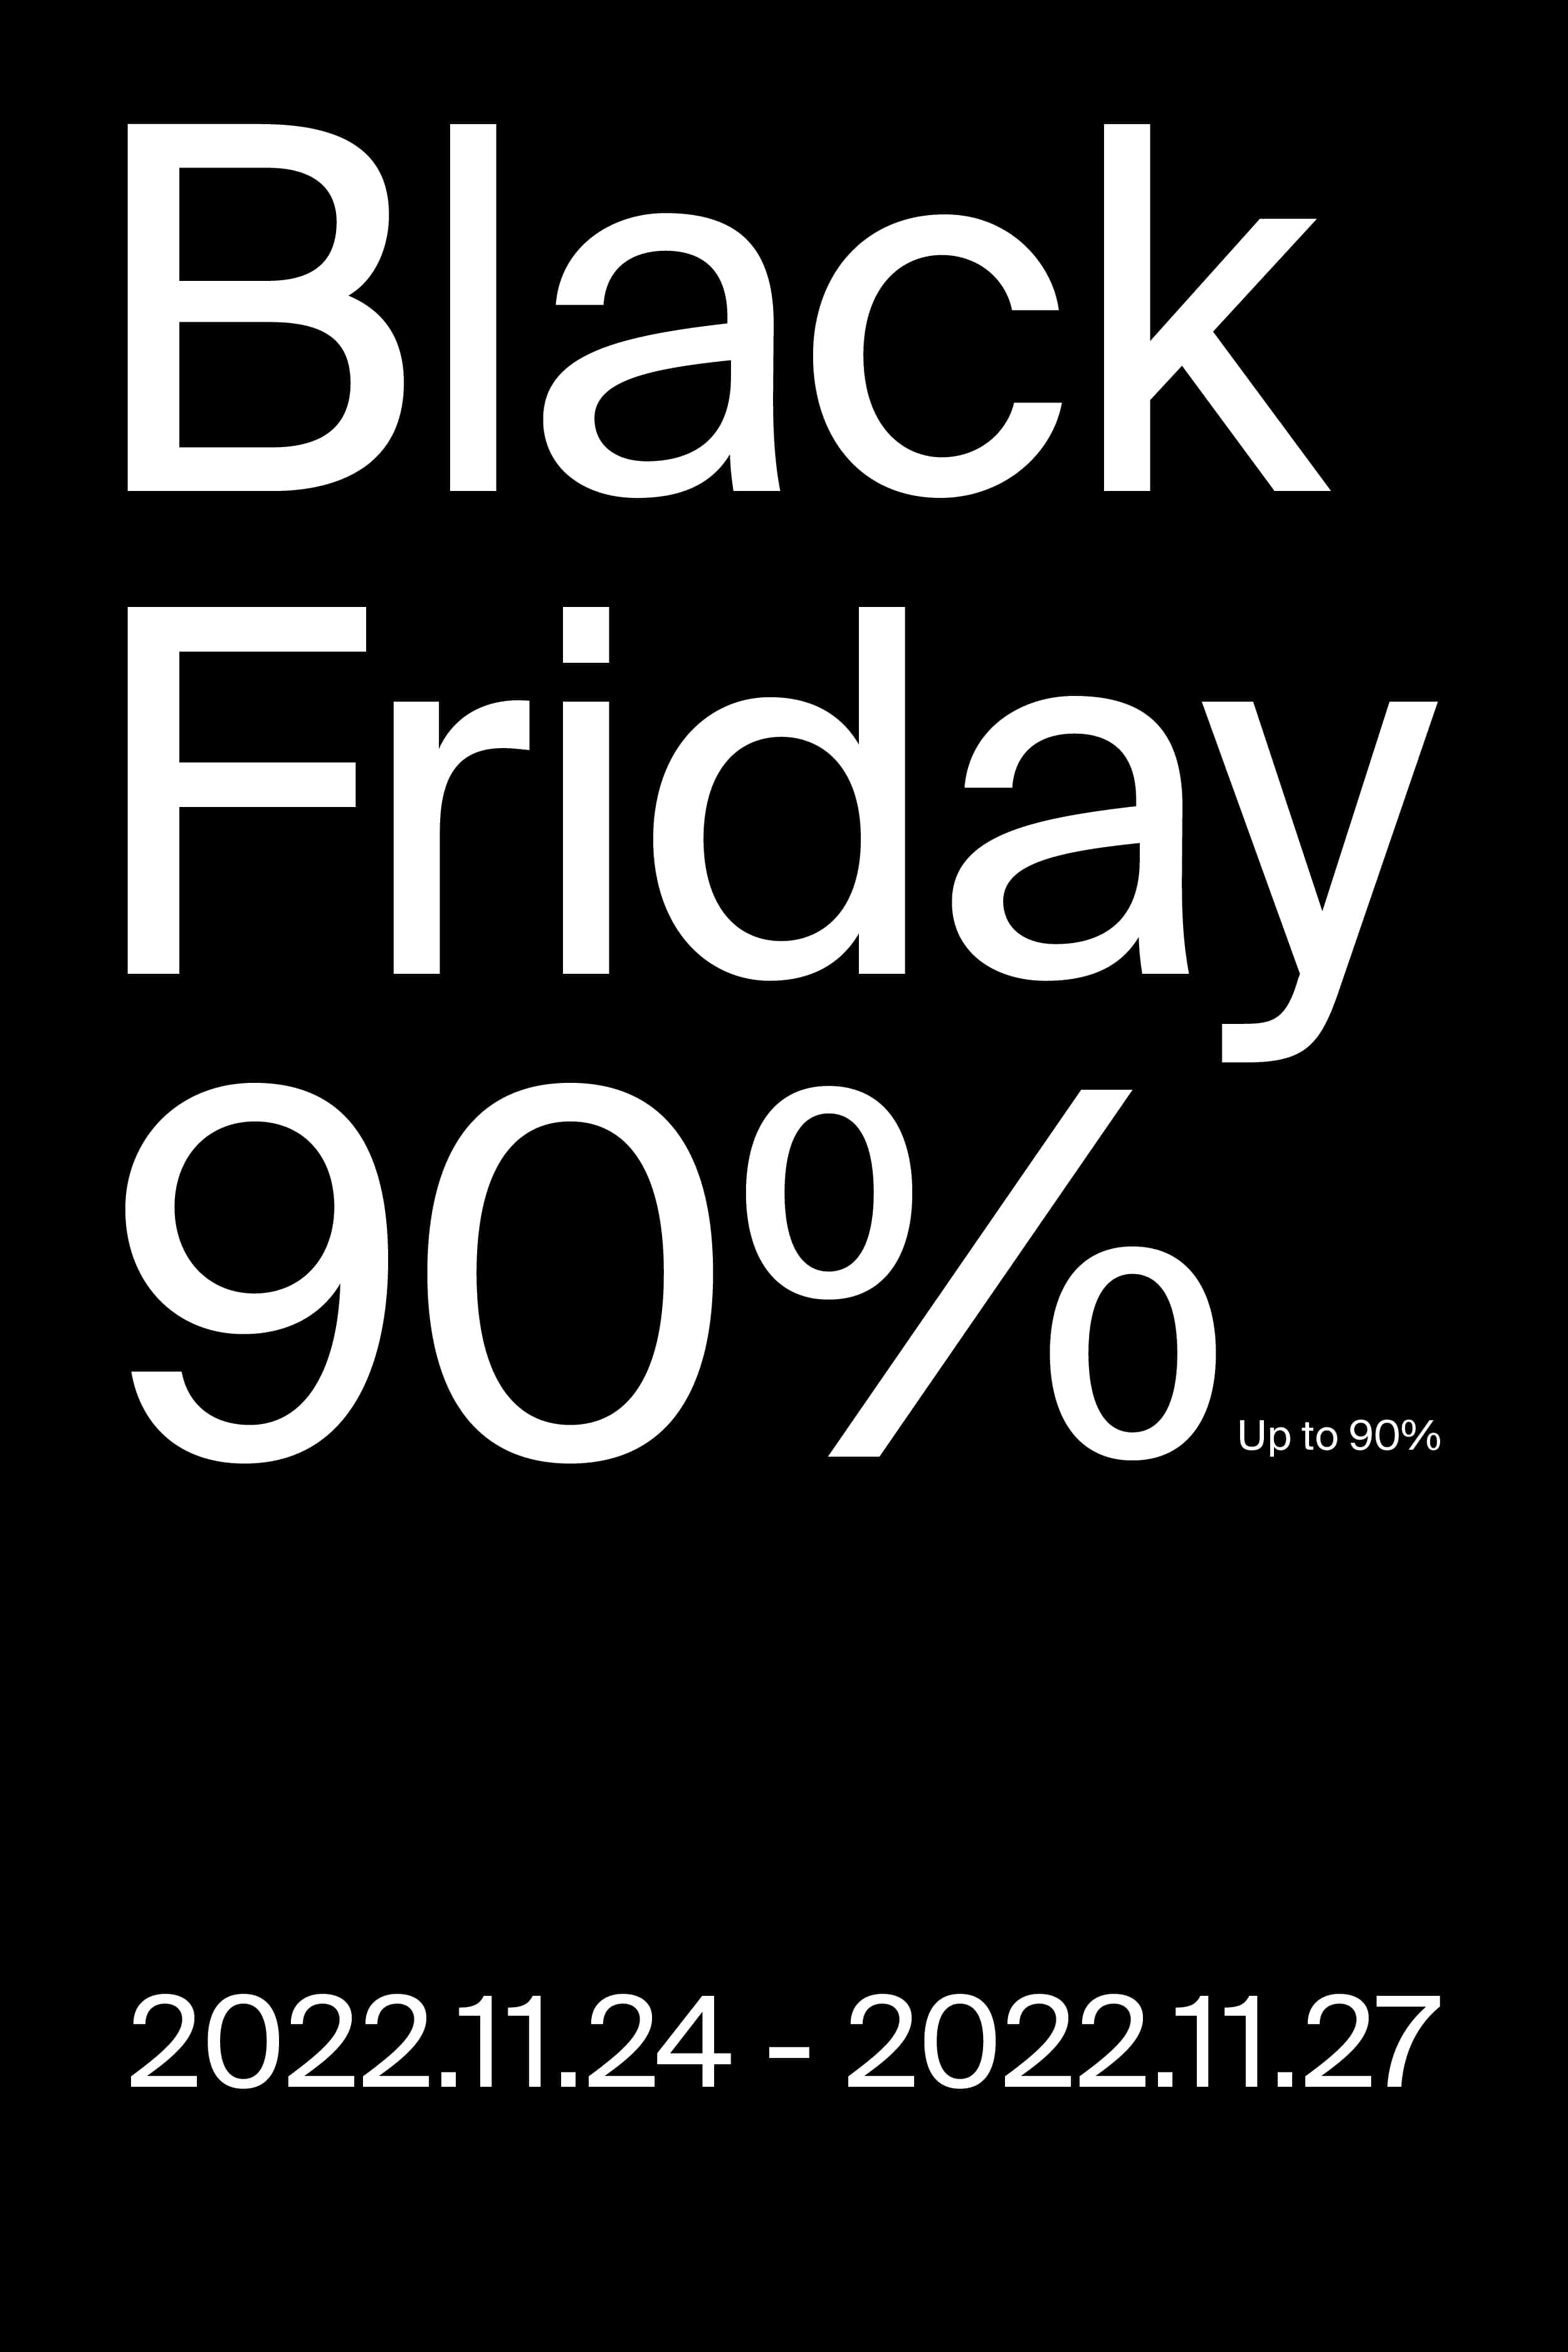 Black Friday 90%